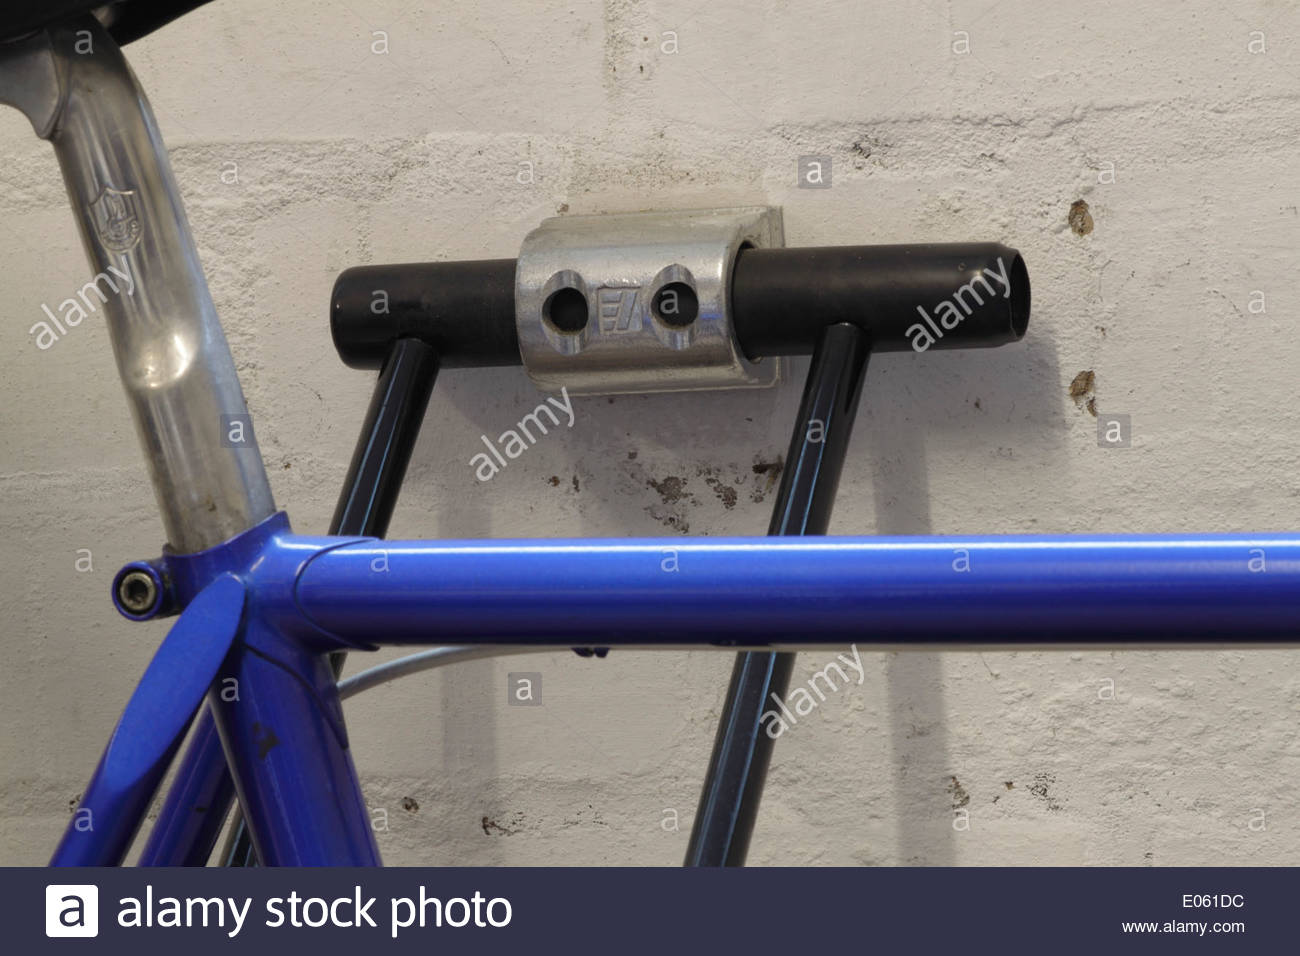 wall bracket for bike lock